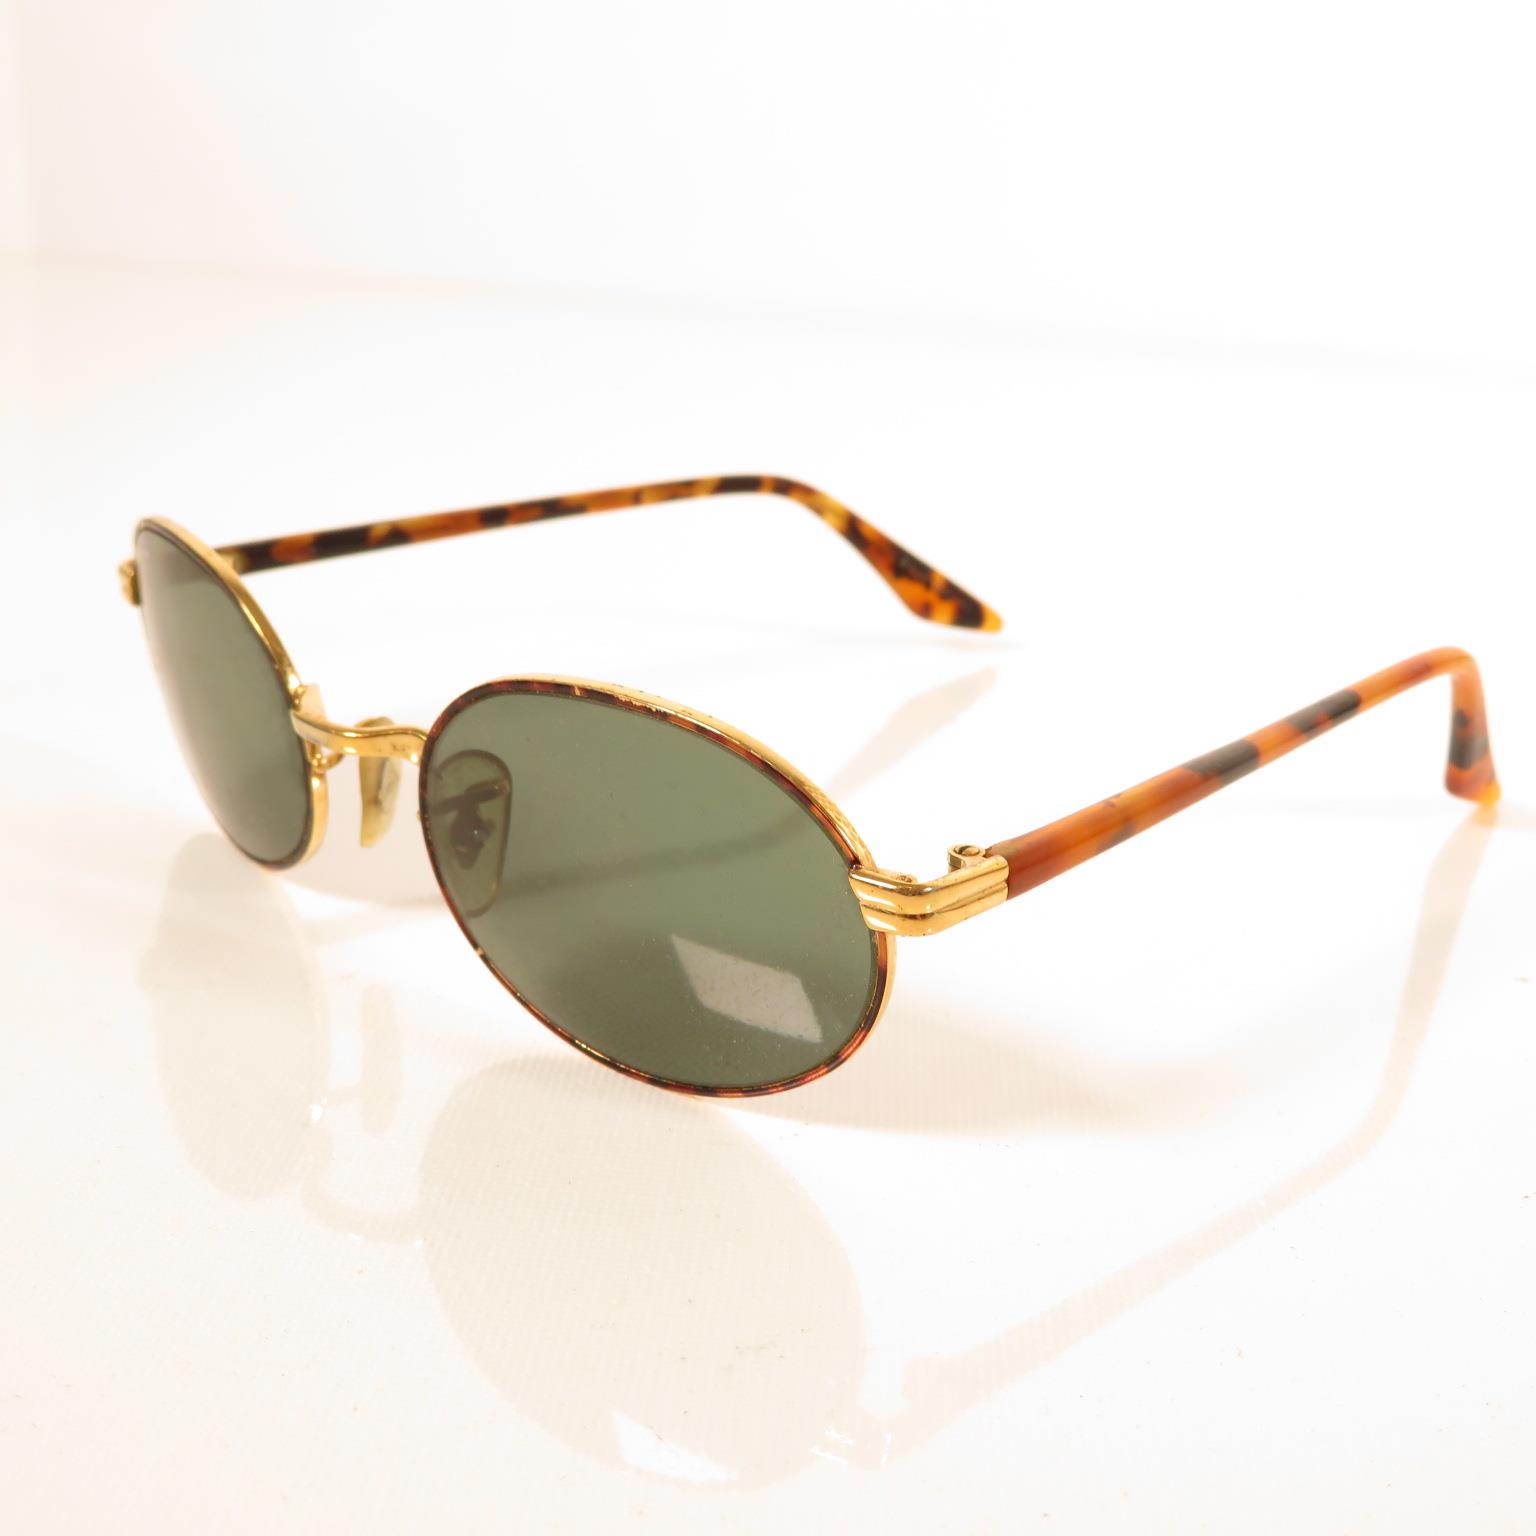 5x pairs Ray Ban sunglasses - - Image 8 of 24